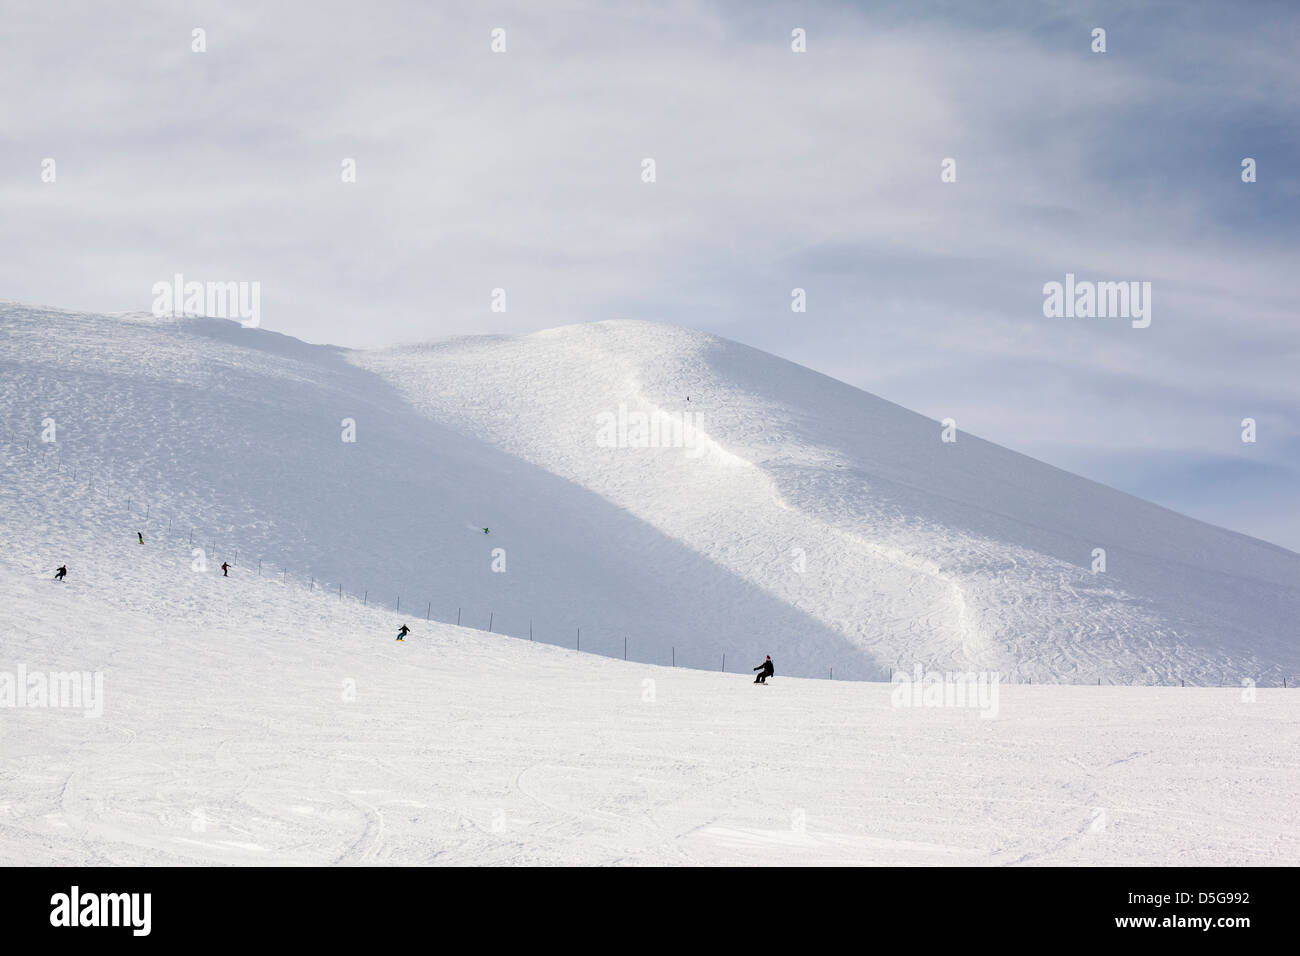 General view of ski slopes on Mount Niseko Annupuri at the resort of Niseko in Japan. Stock Photo